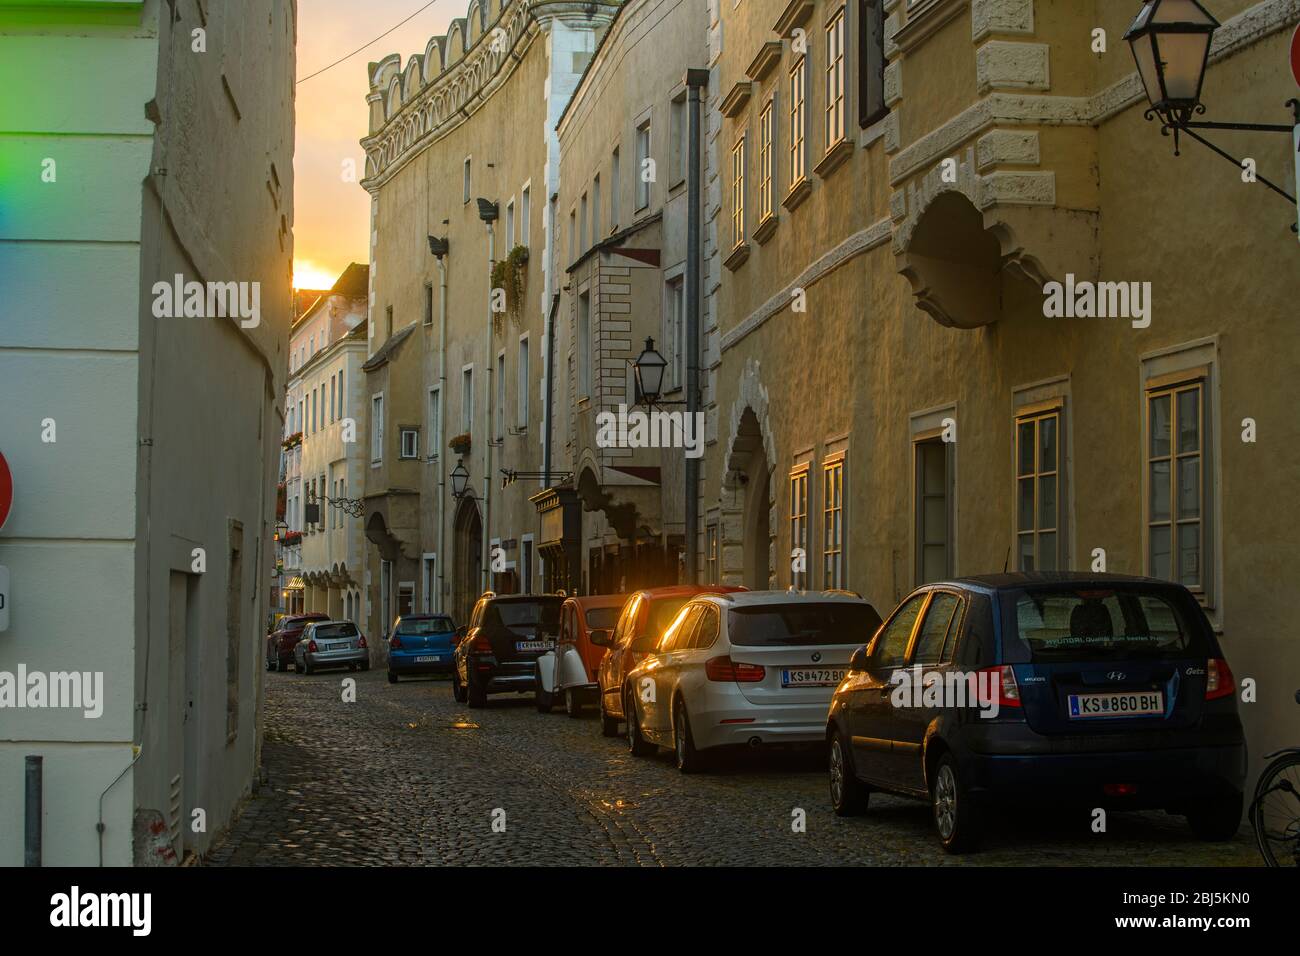 Street scenes in the small town at dusk, Stein/Krems, Lower Austria, Austria Stock Photo